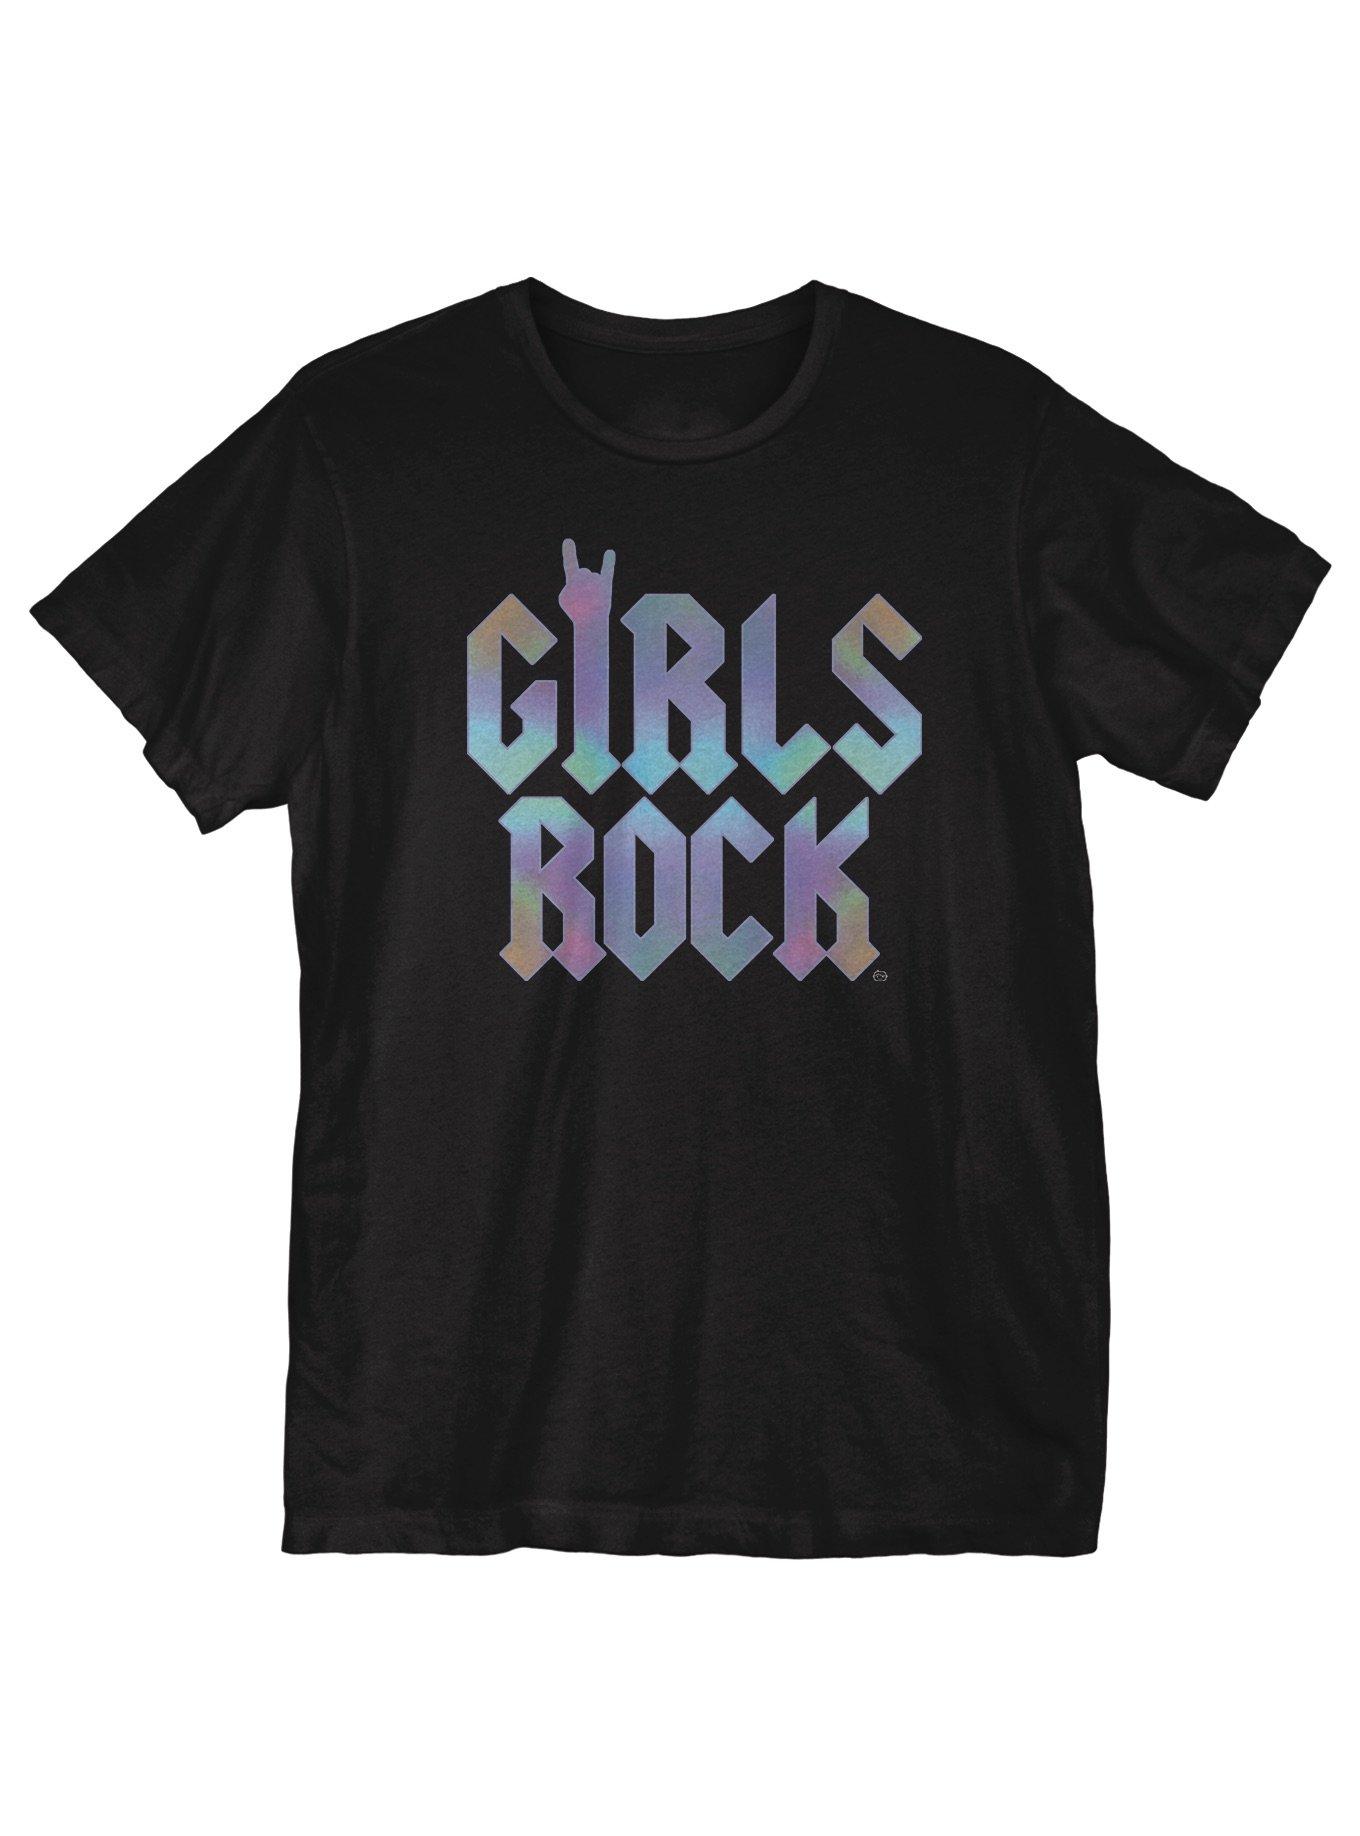 Girls Rock T-Shirt, BLACK, hi-res